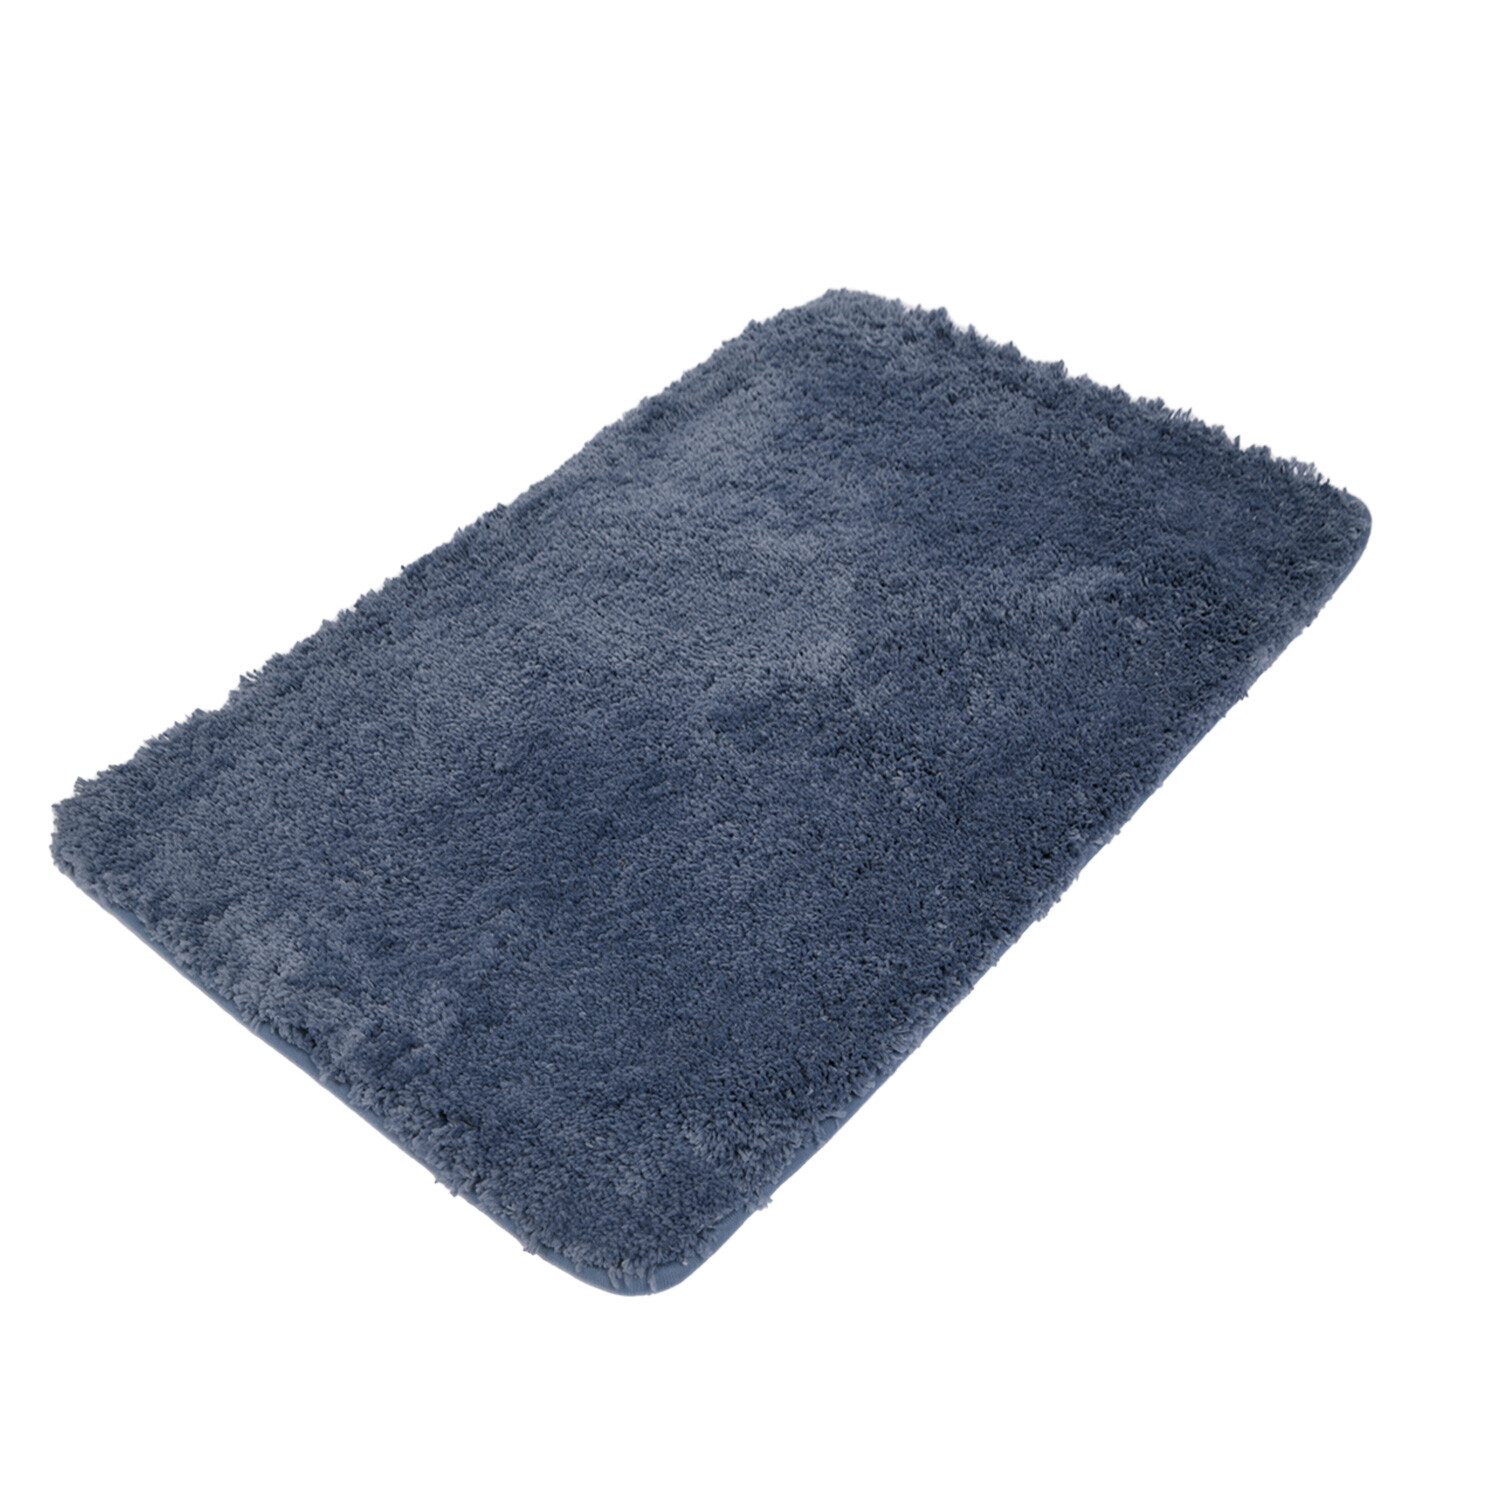 Deluxe Microfibre Bath Mat - Slate Blue Image